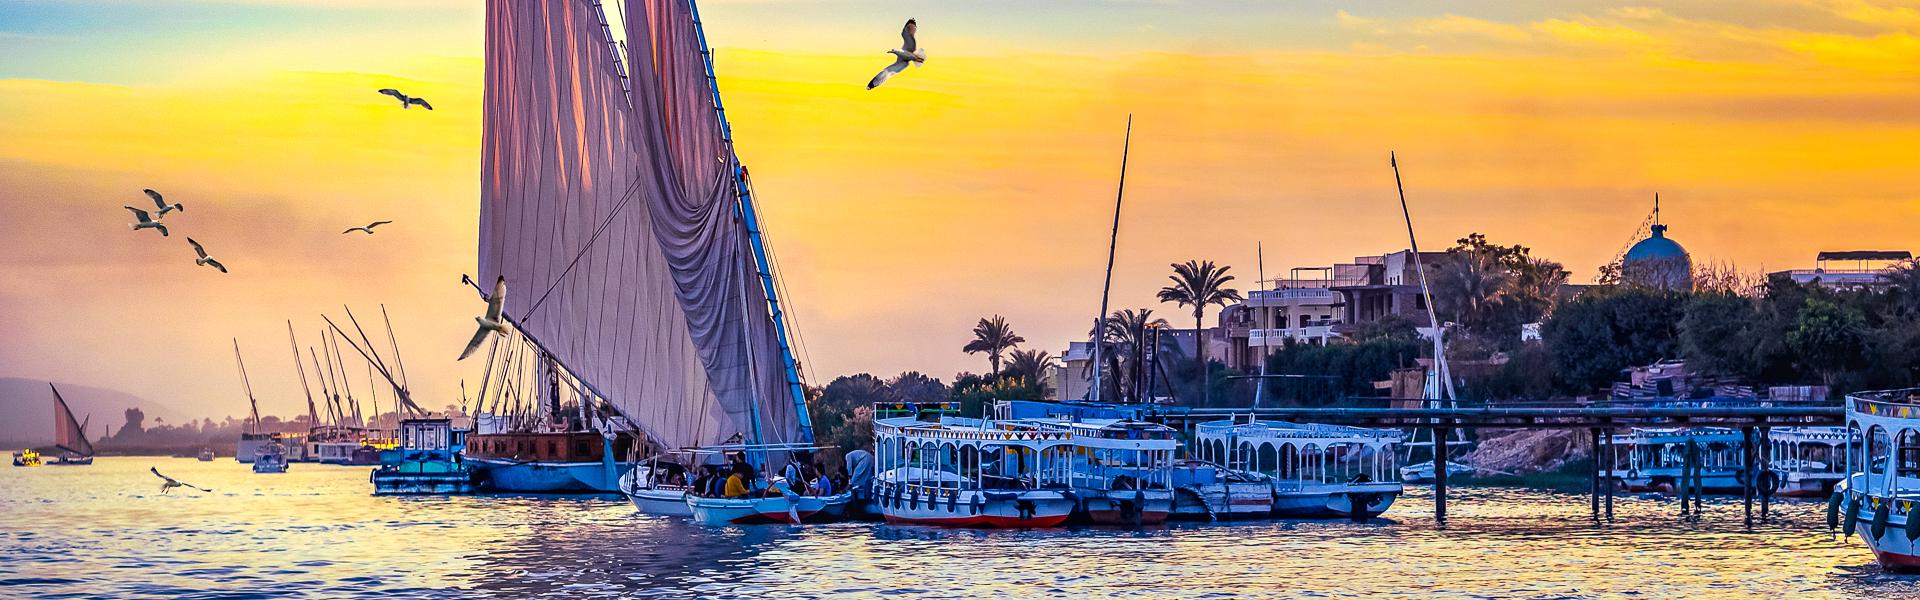 Felucca bei Sonnenuntergang am Nil |  Repina Valeriya, Shutterstock / Chamleon